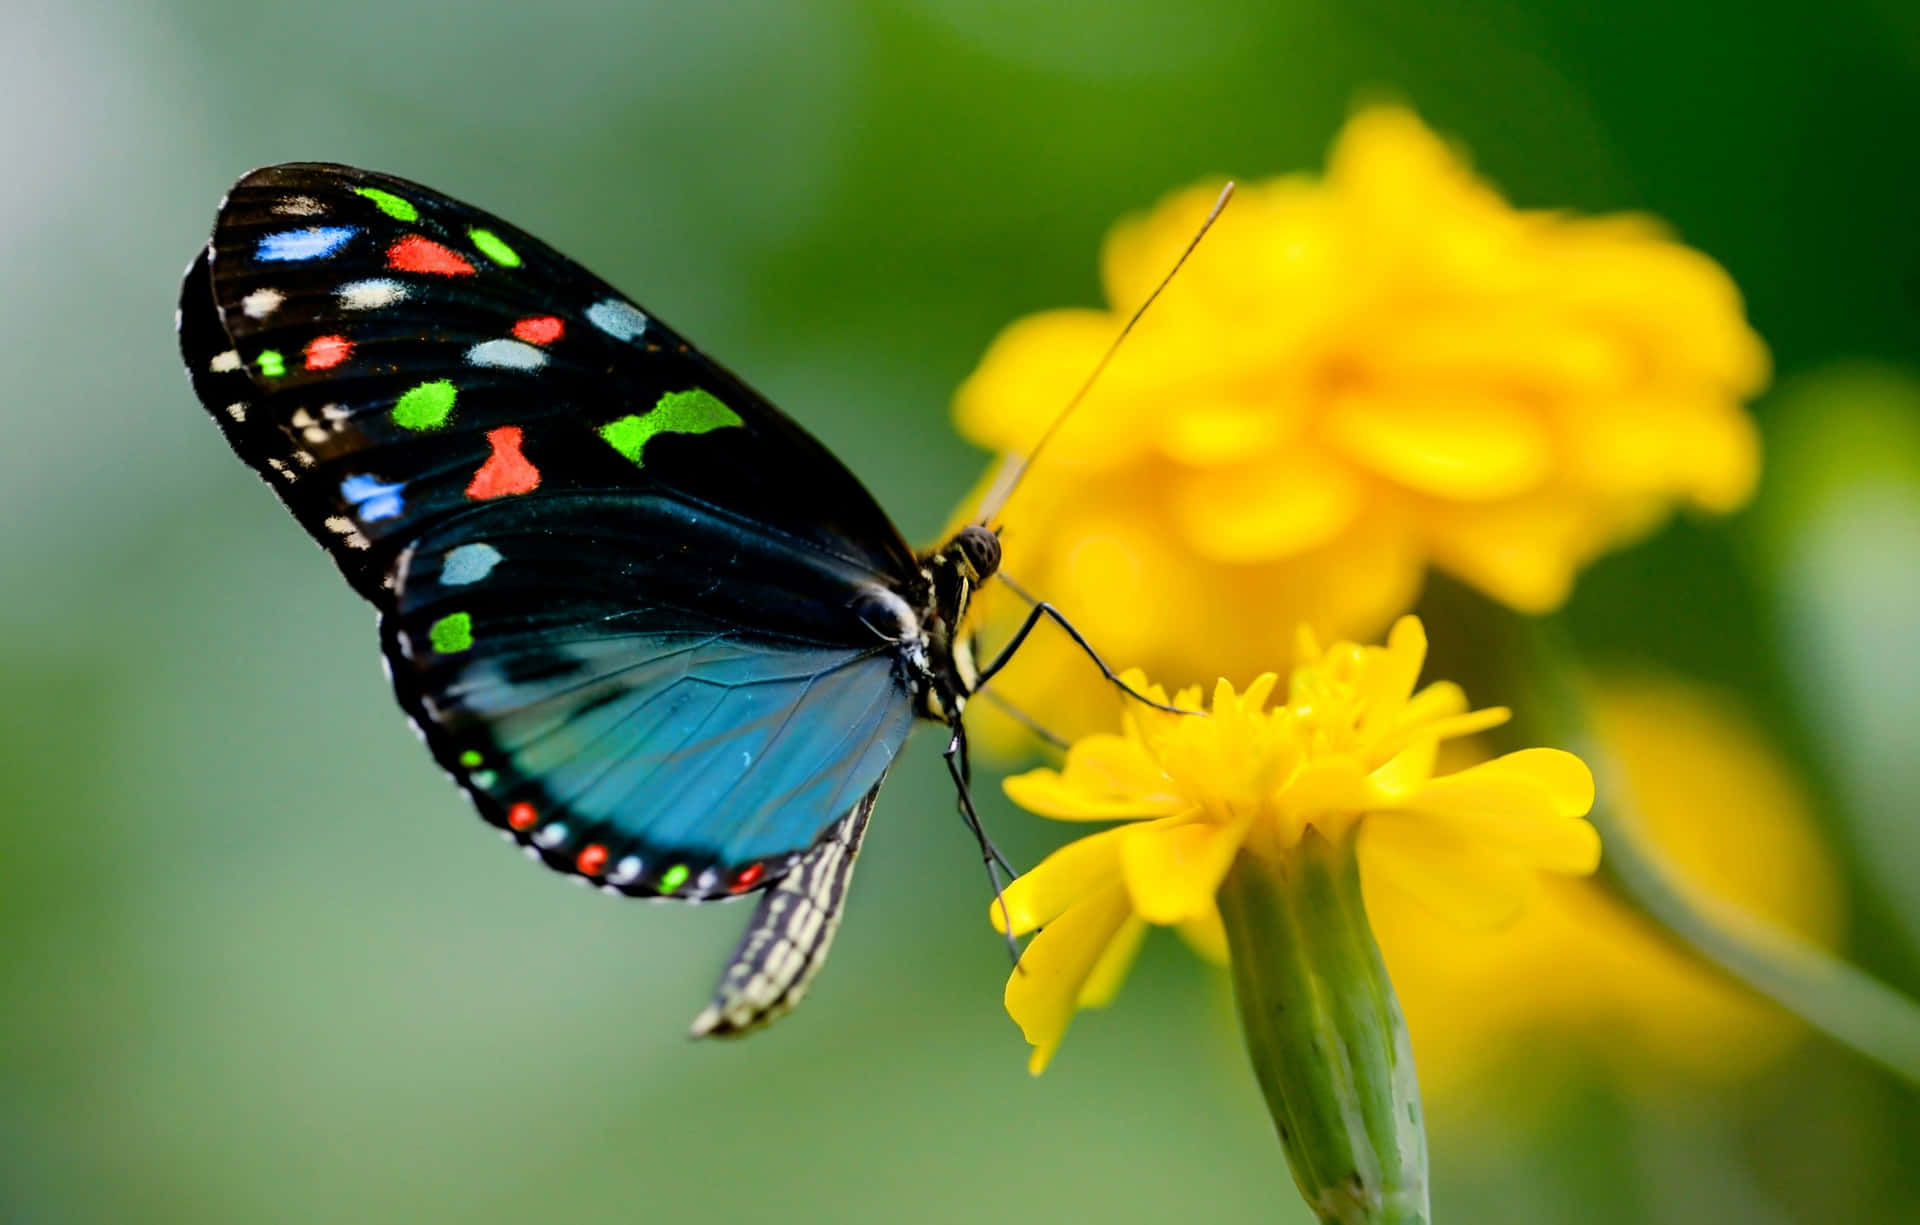 A beautiful butterfly in profile